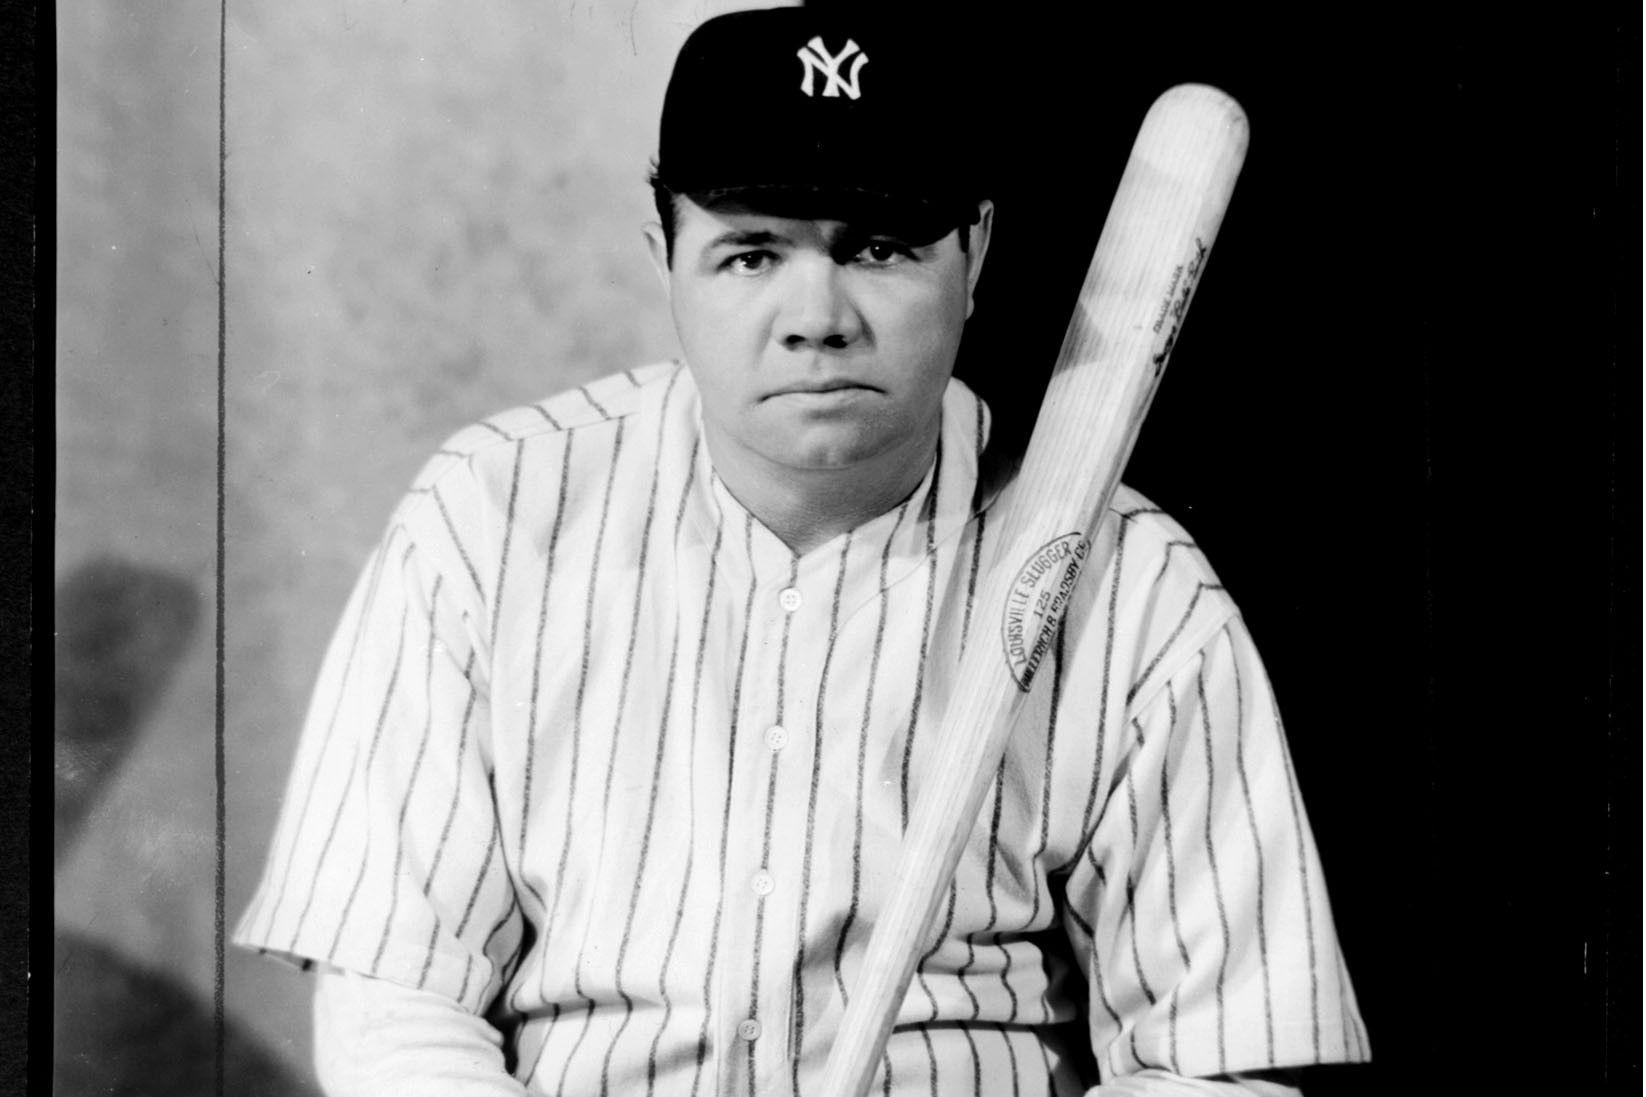 Journalist debunks Babe Ruth's legendary 'called shot'. New York Post